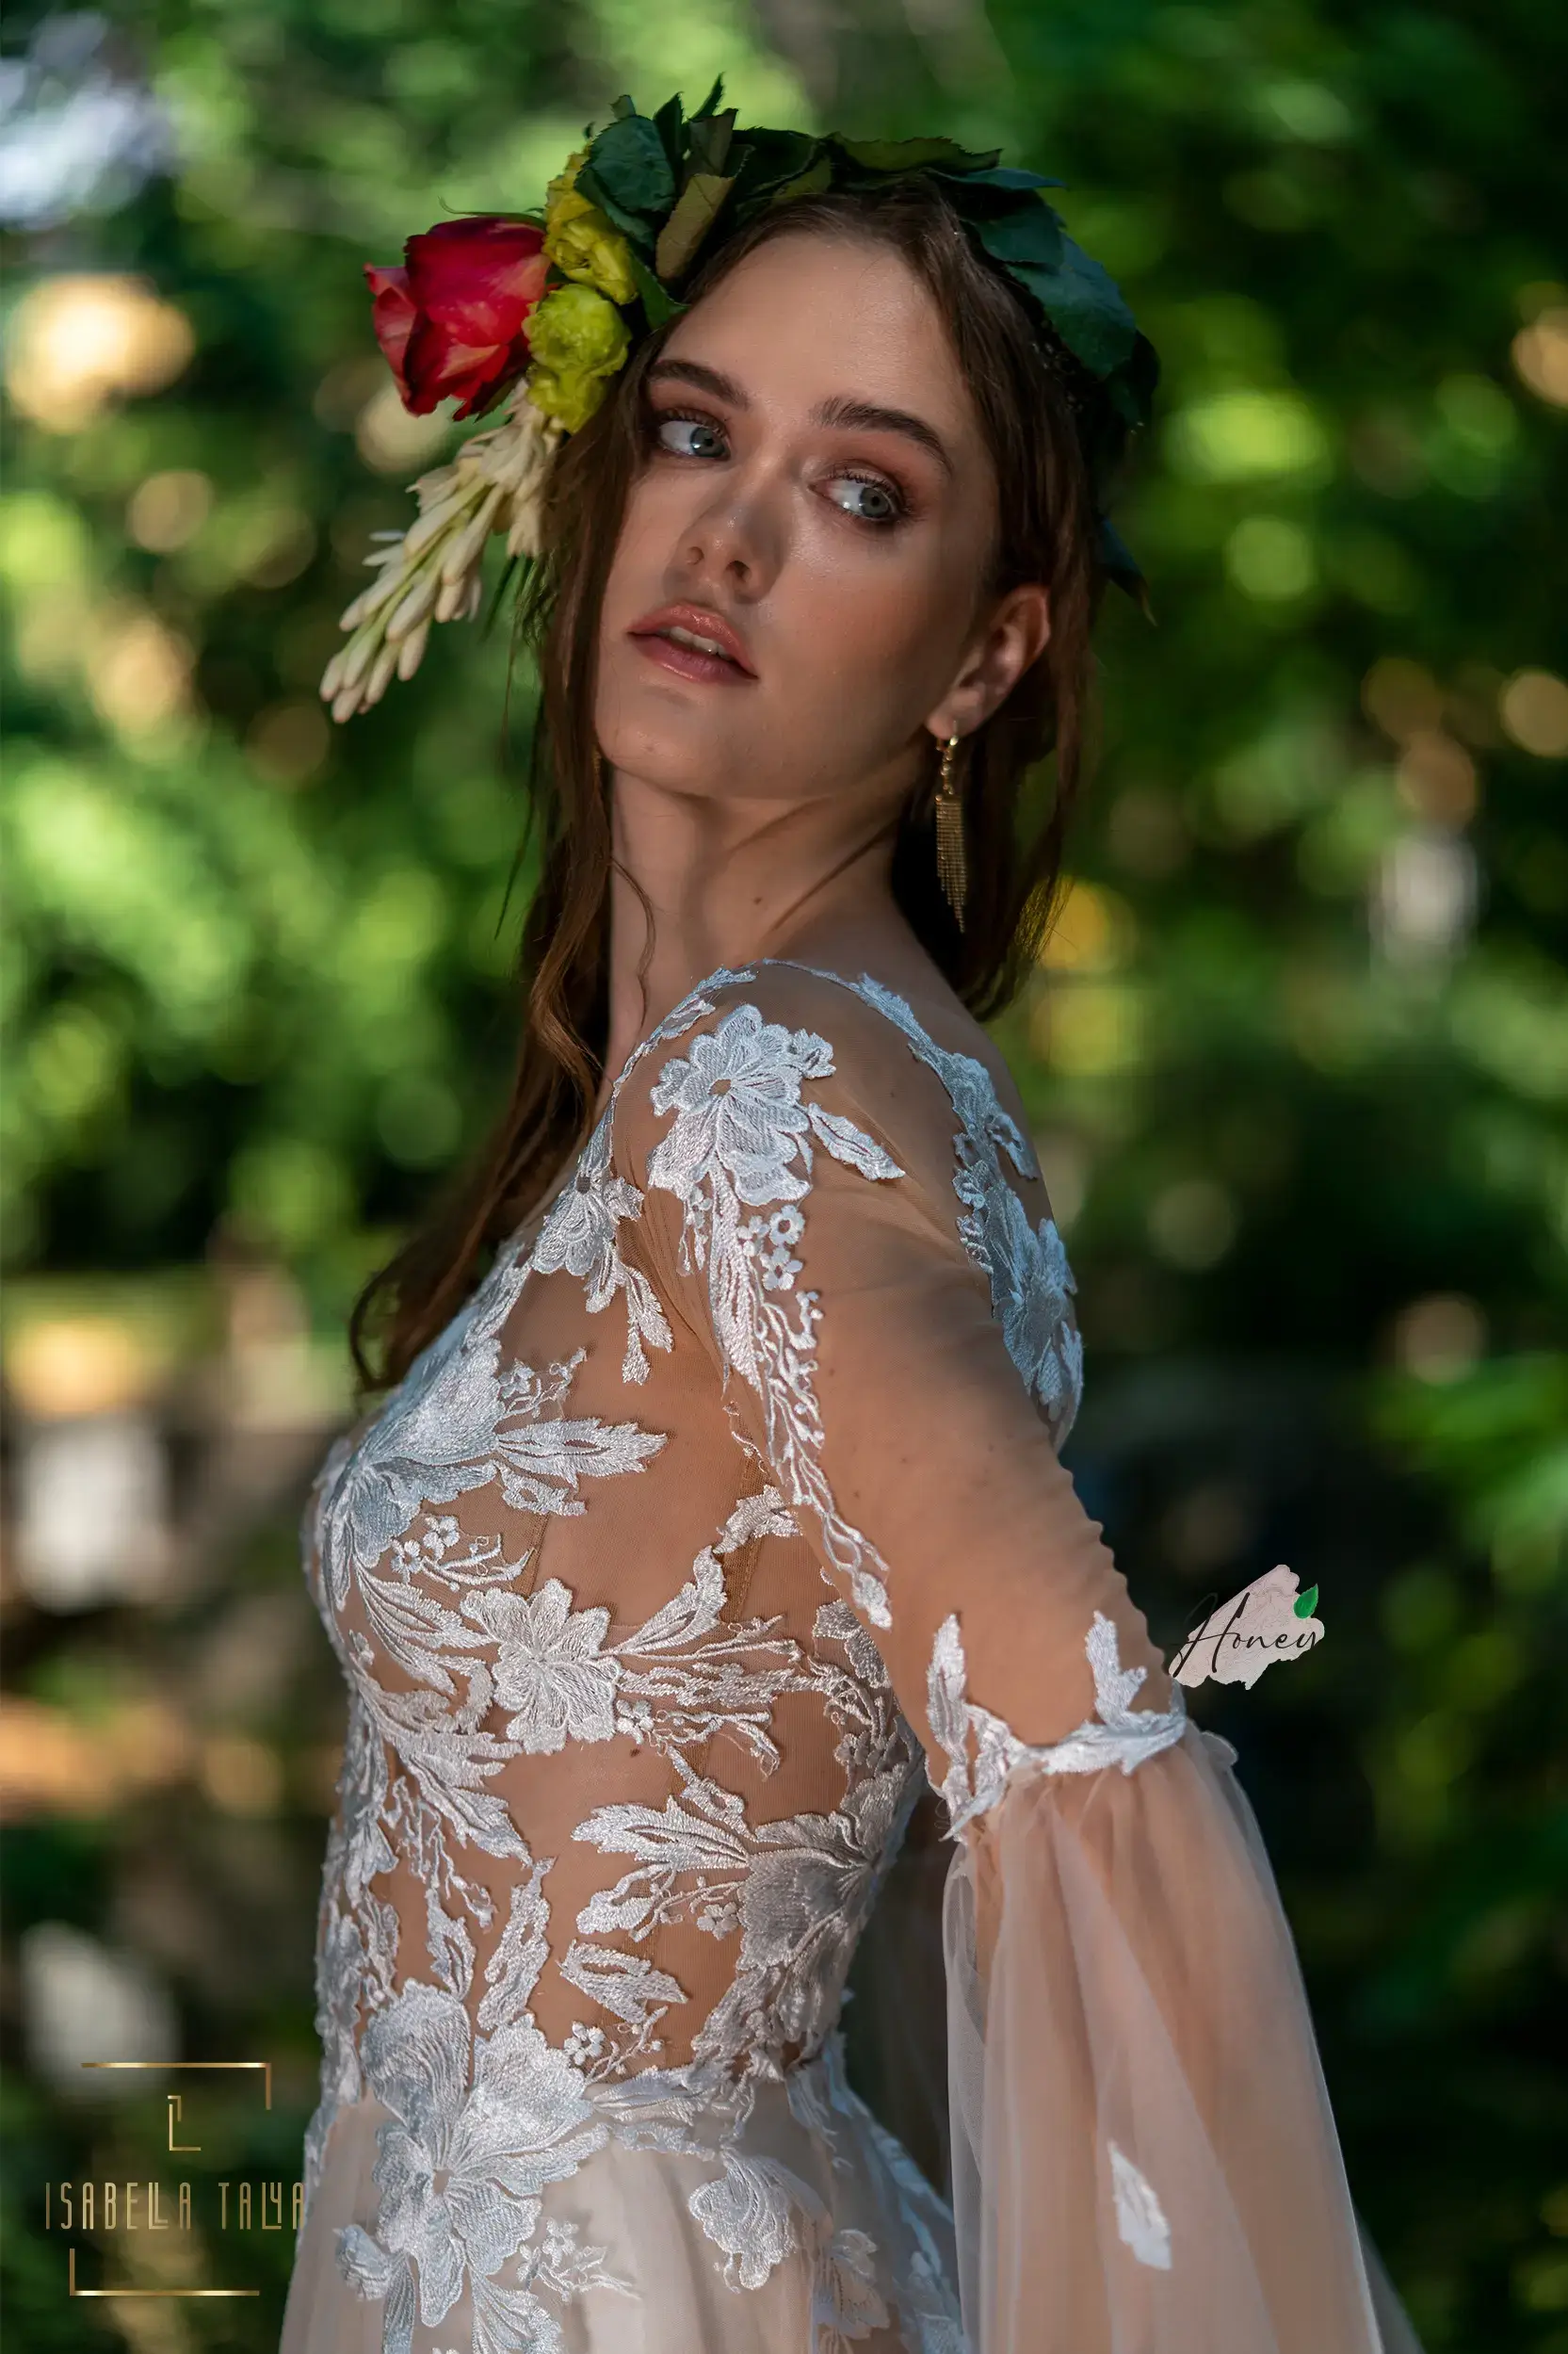 isabella talya wedding dress bridal gown